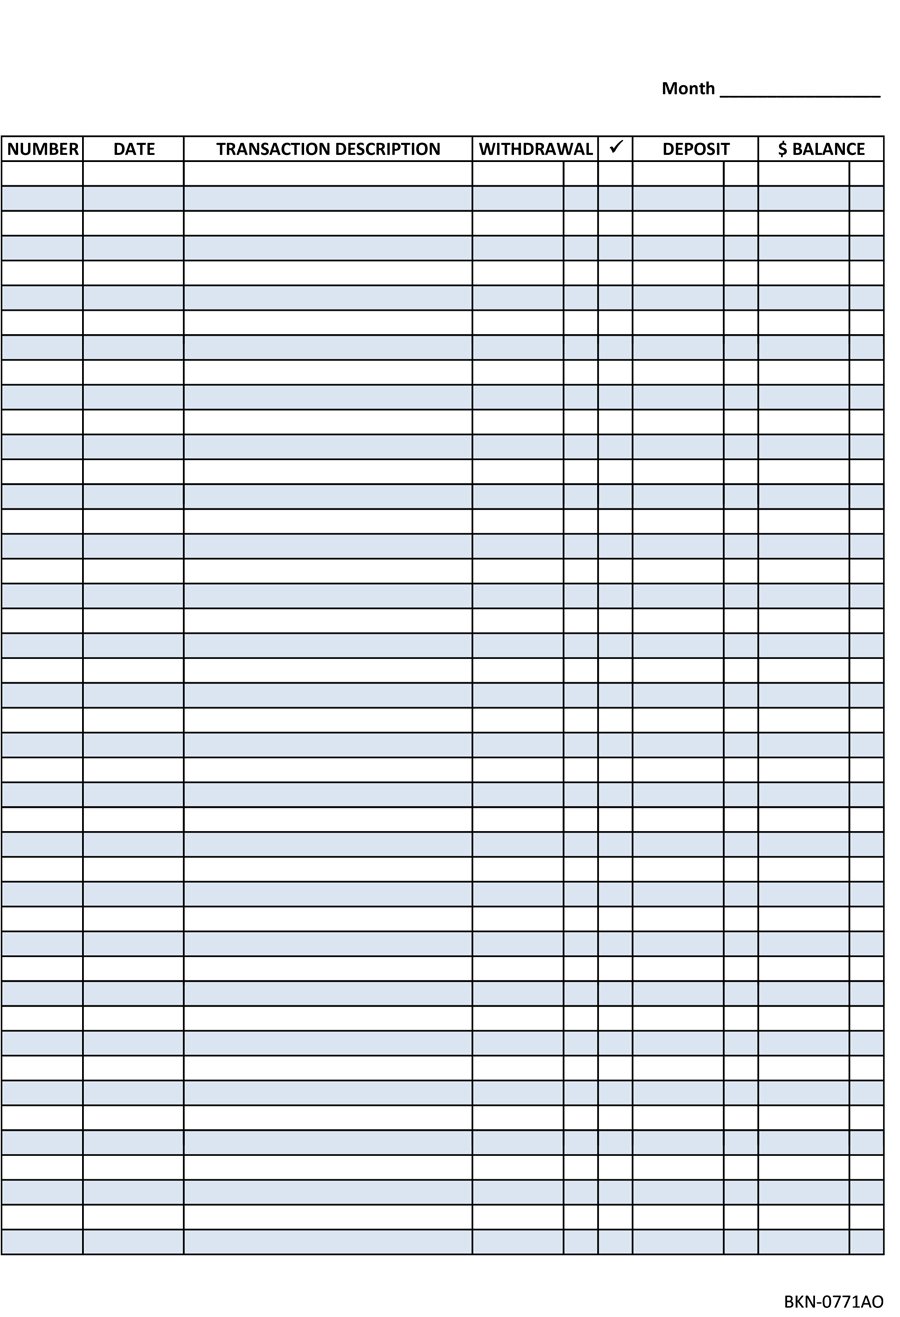 37 Checkbook Register Templates [100% Free, Printable]   Template Lab